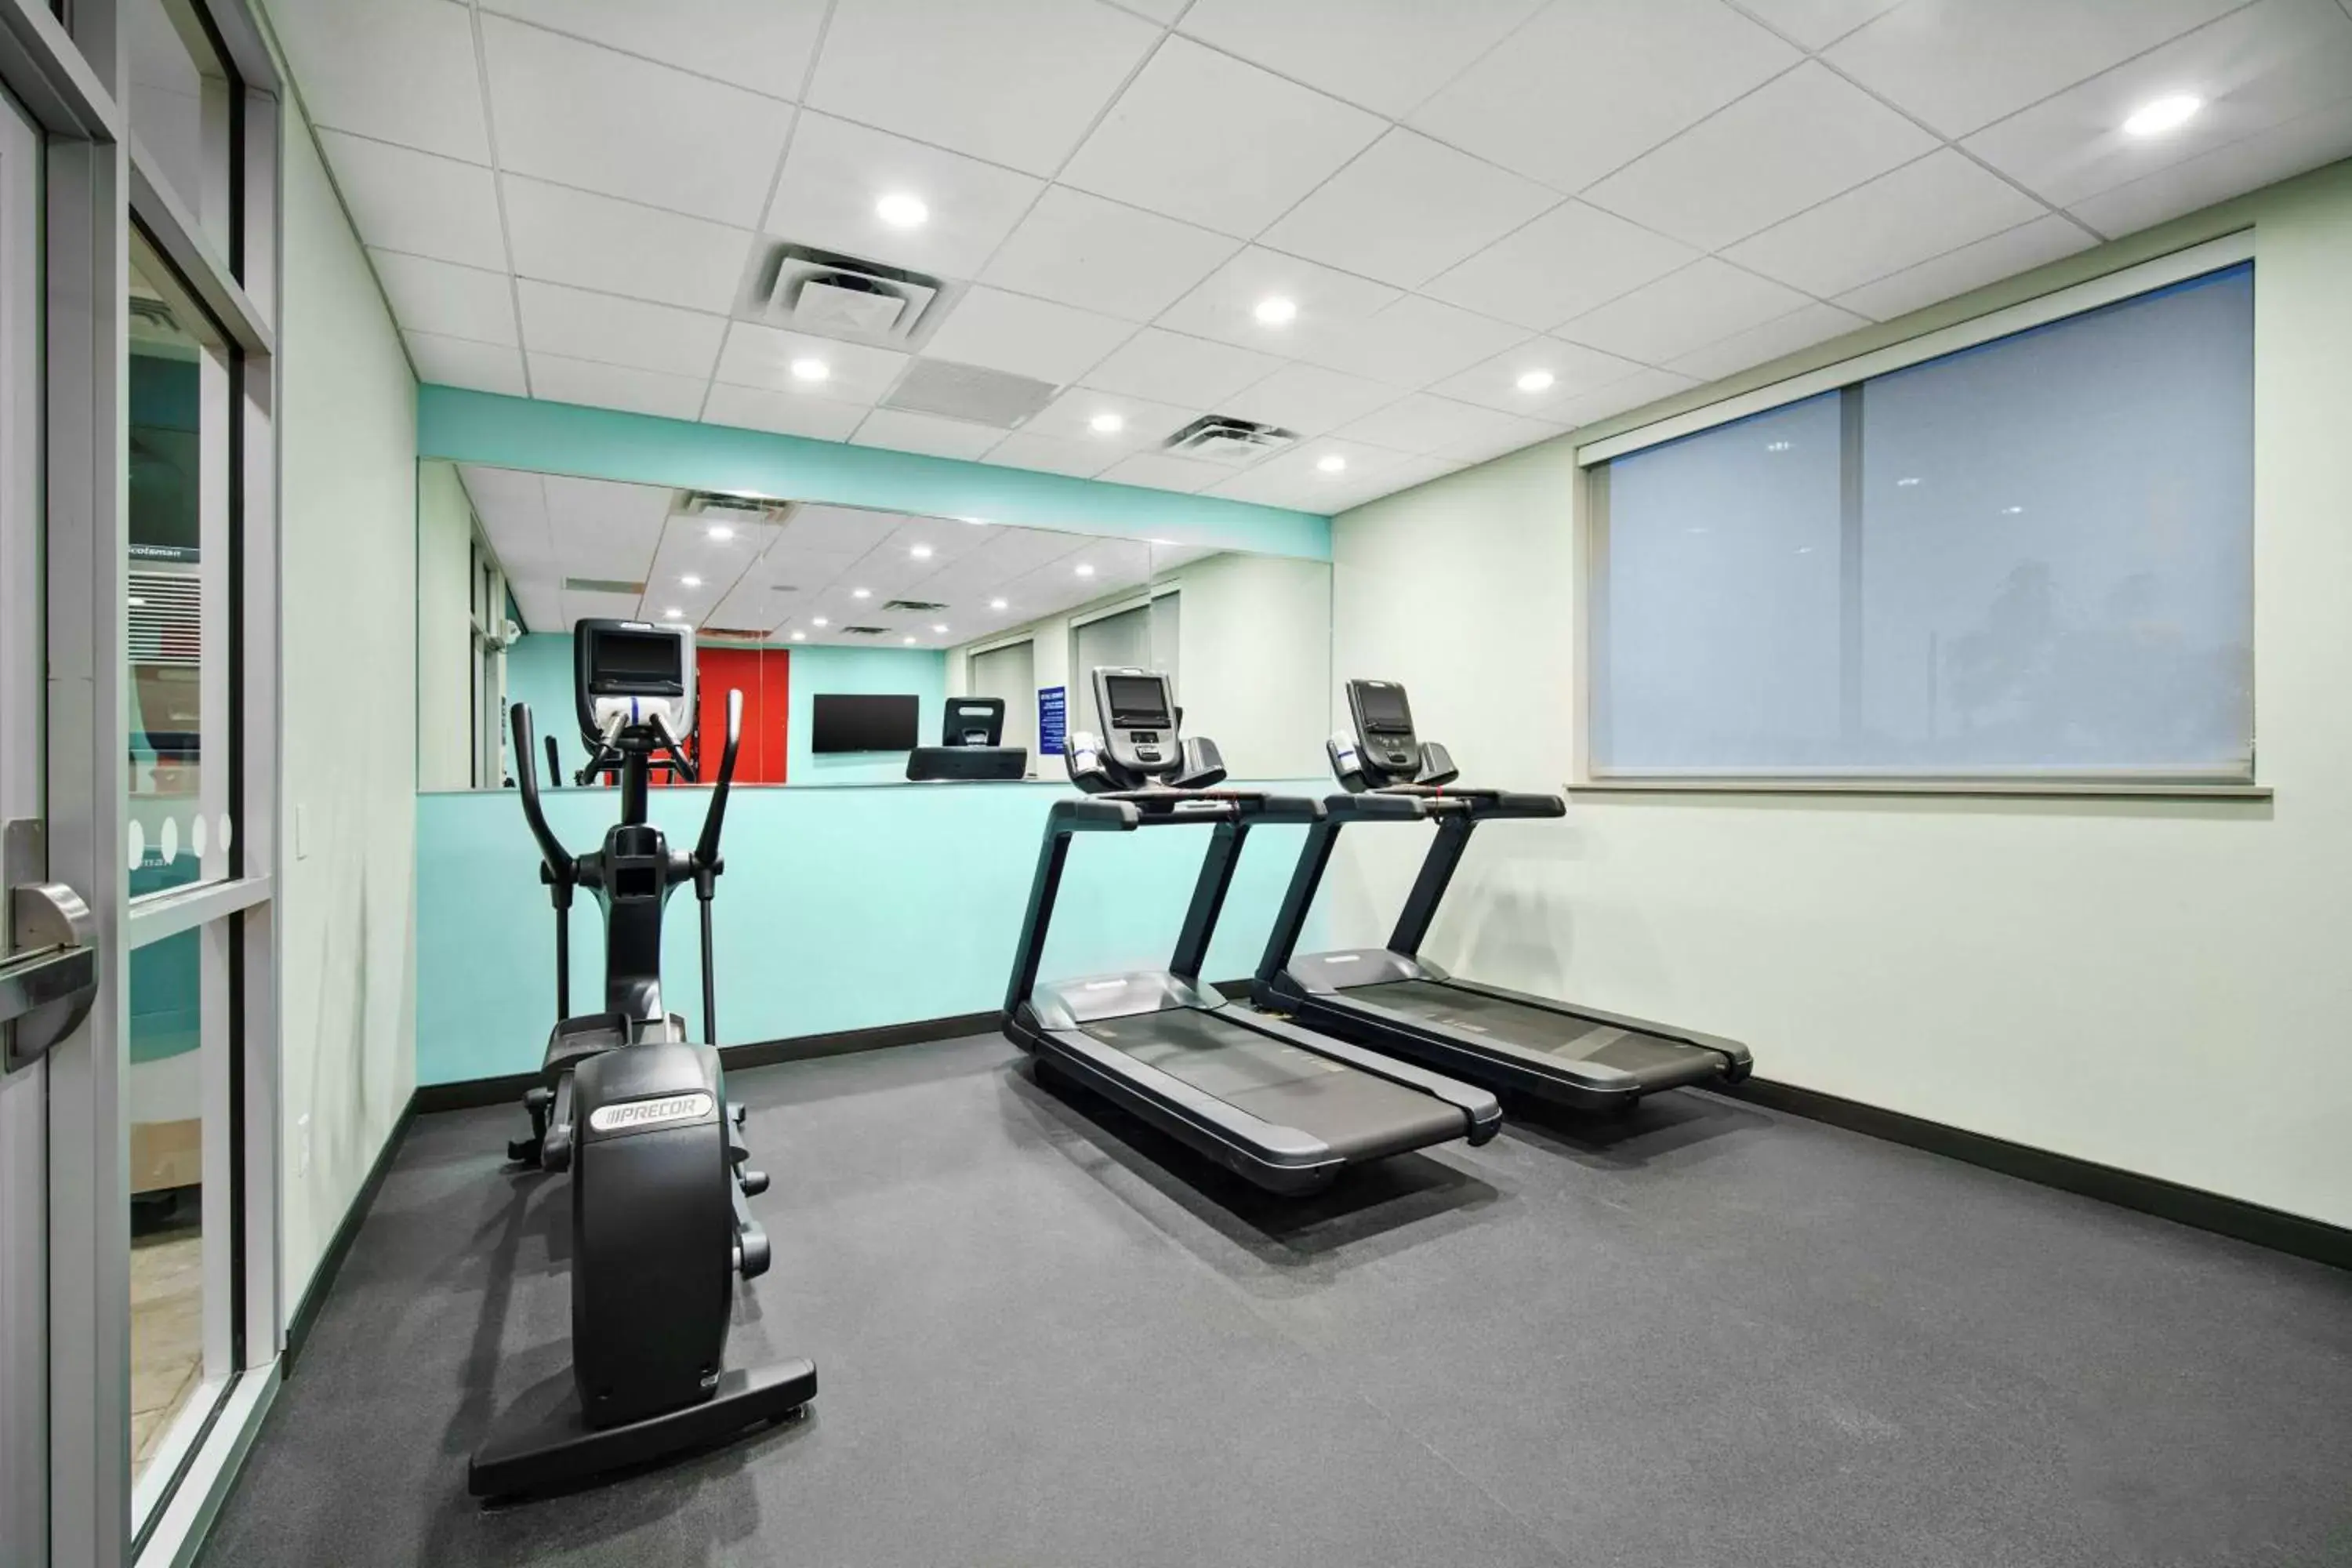 Fitness centre/facilities, Fitness Center/Facilities in Tru By Hilton Goodyear Phoenix West, Az